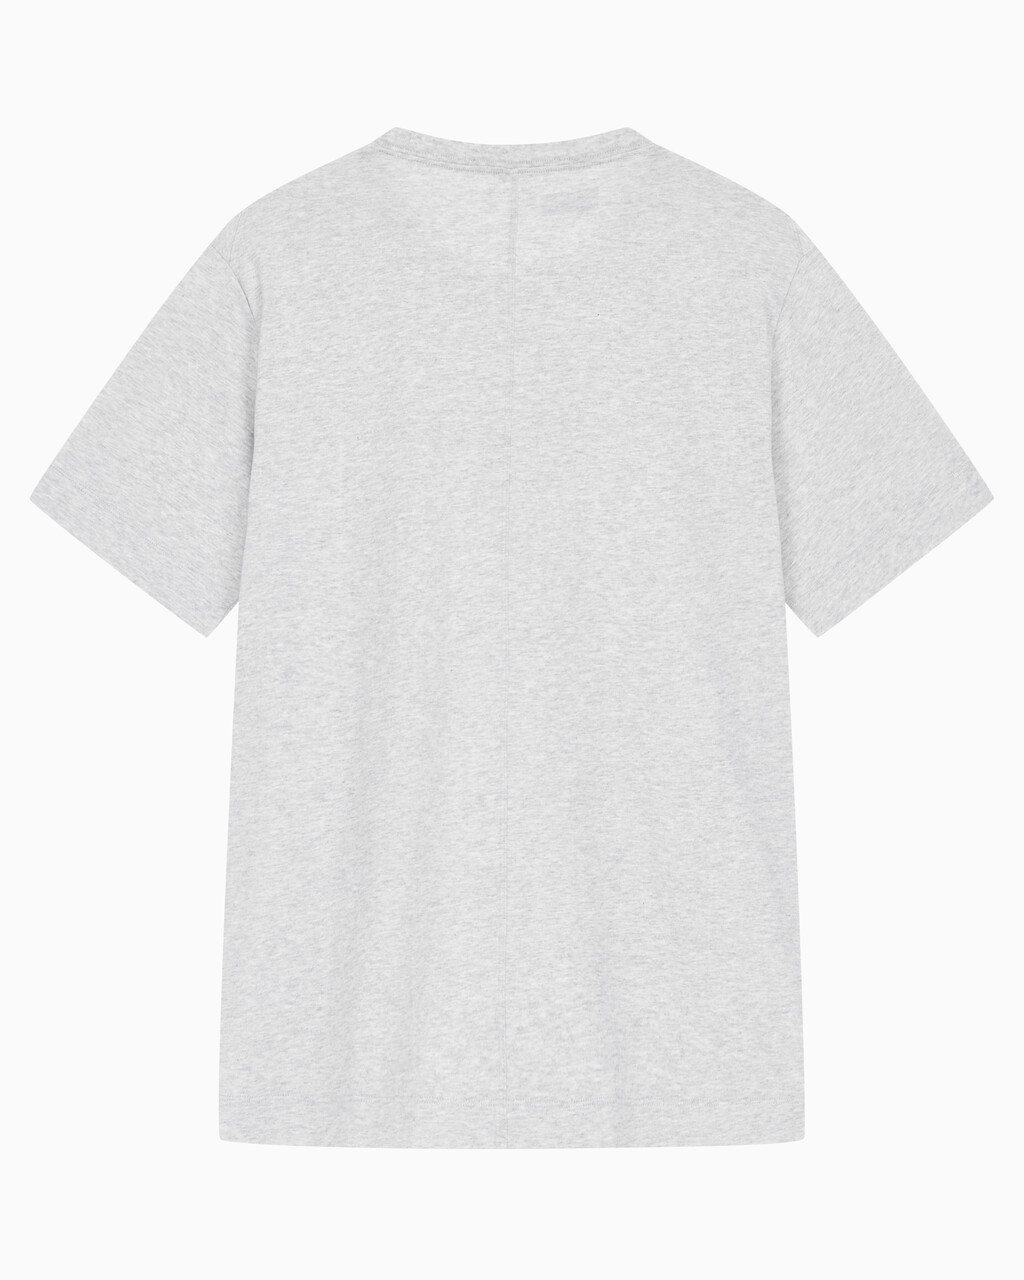 Buy 남성 레귤러 핏 에센셜 로고 반팔 티셔츠 in color ATHLETIC GREY H